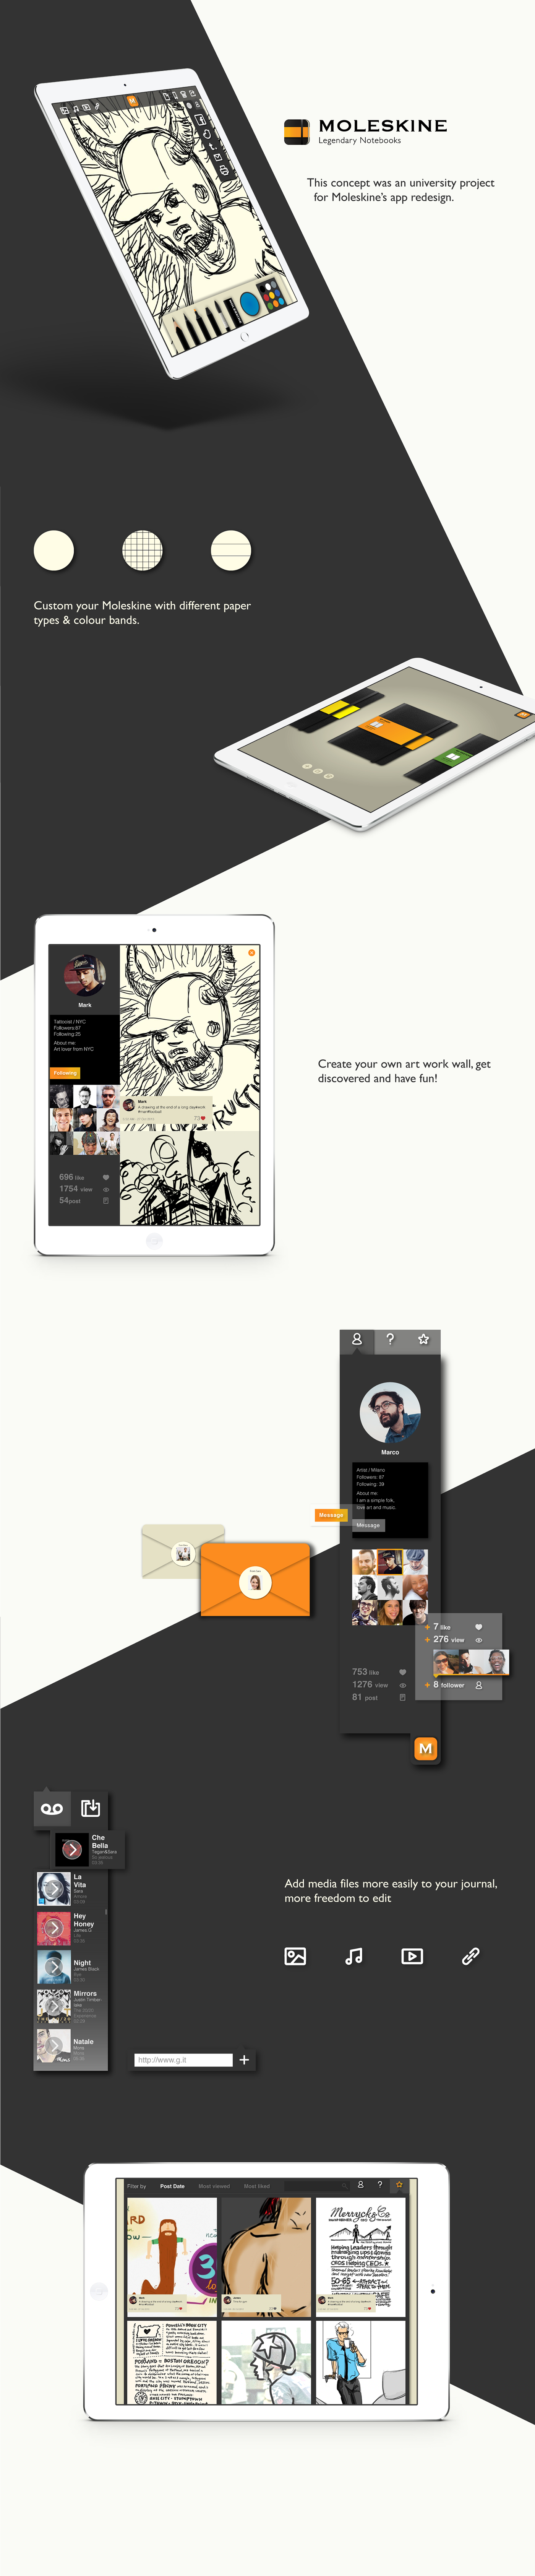 Adobe Portfolio moleskine notebook concept app iPad ux UI Interface ios redesign application